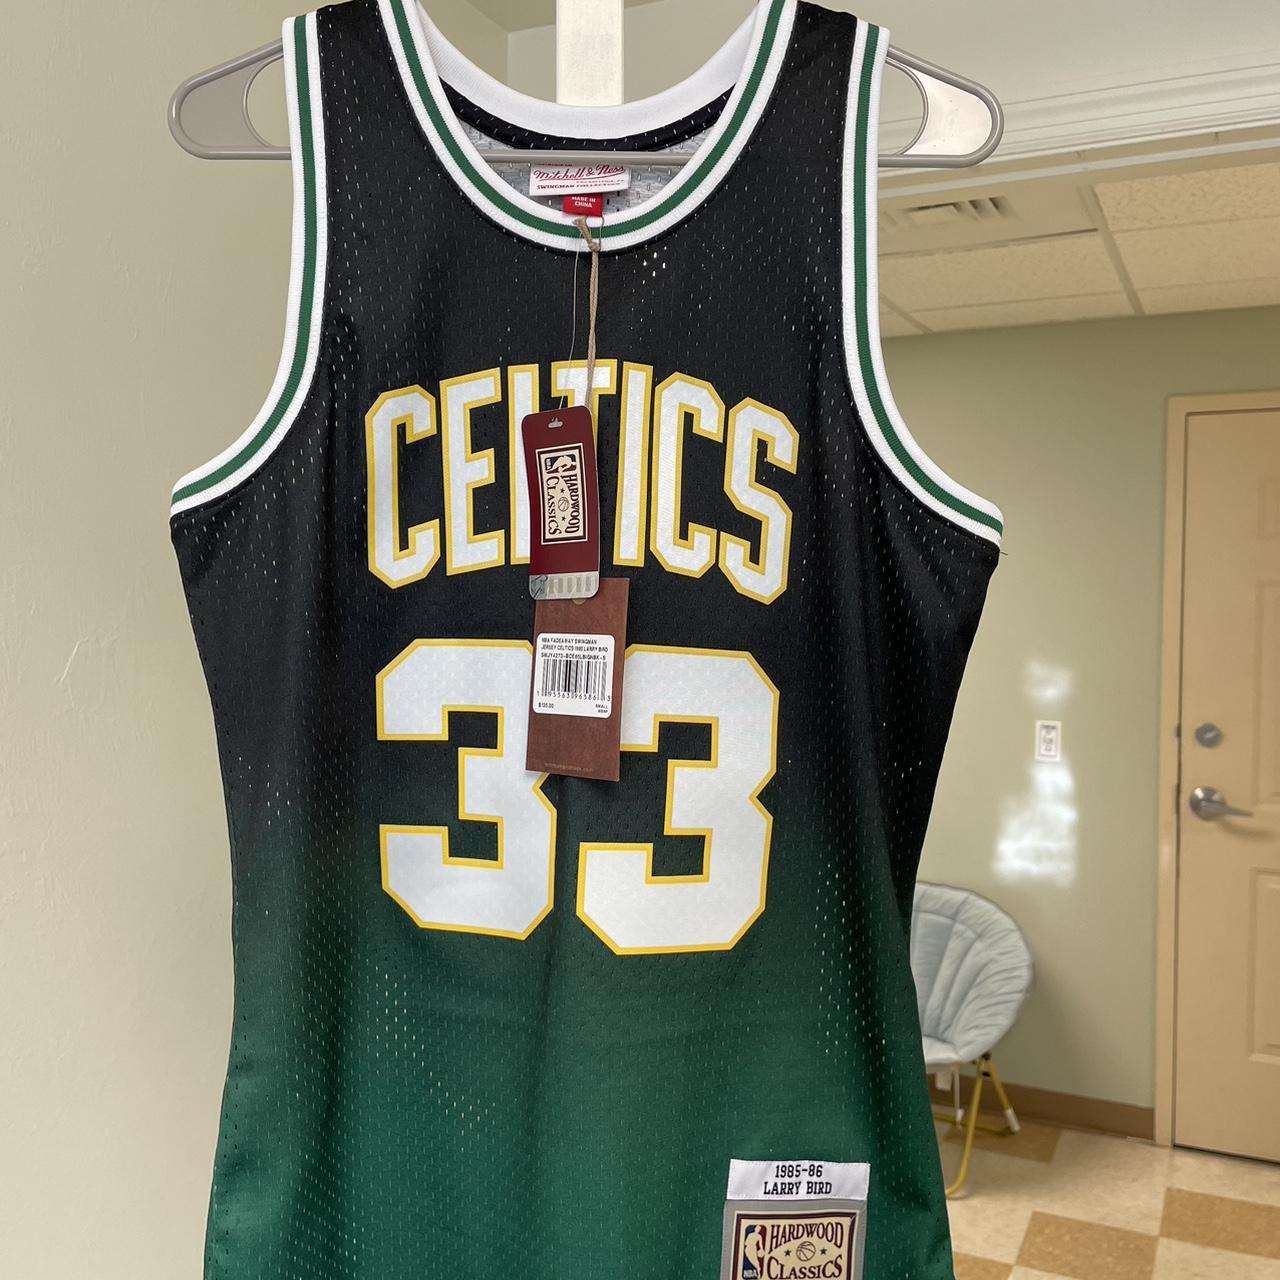 Mitchell & Ness - Swingman Jersey Celtics Larry Bird Jersey - Black